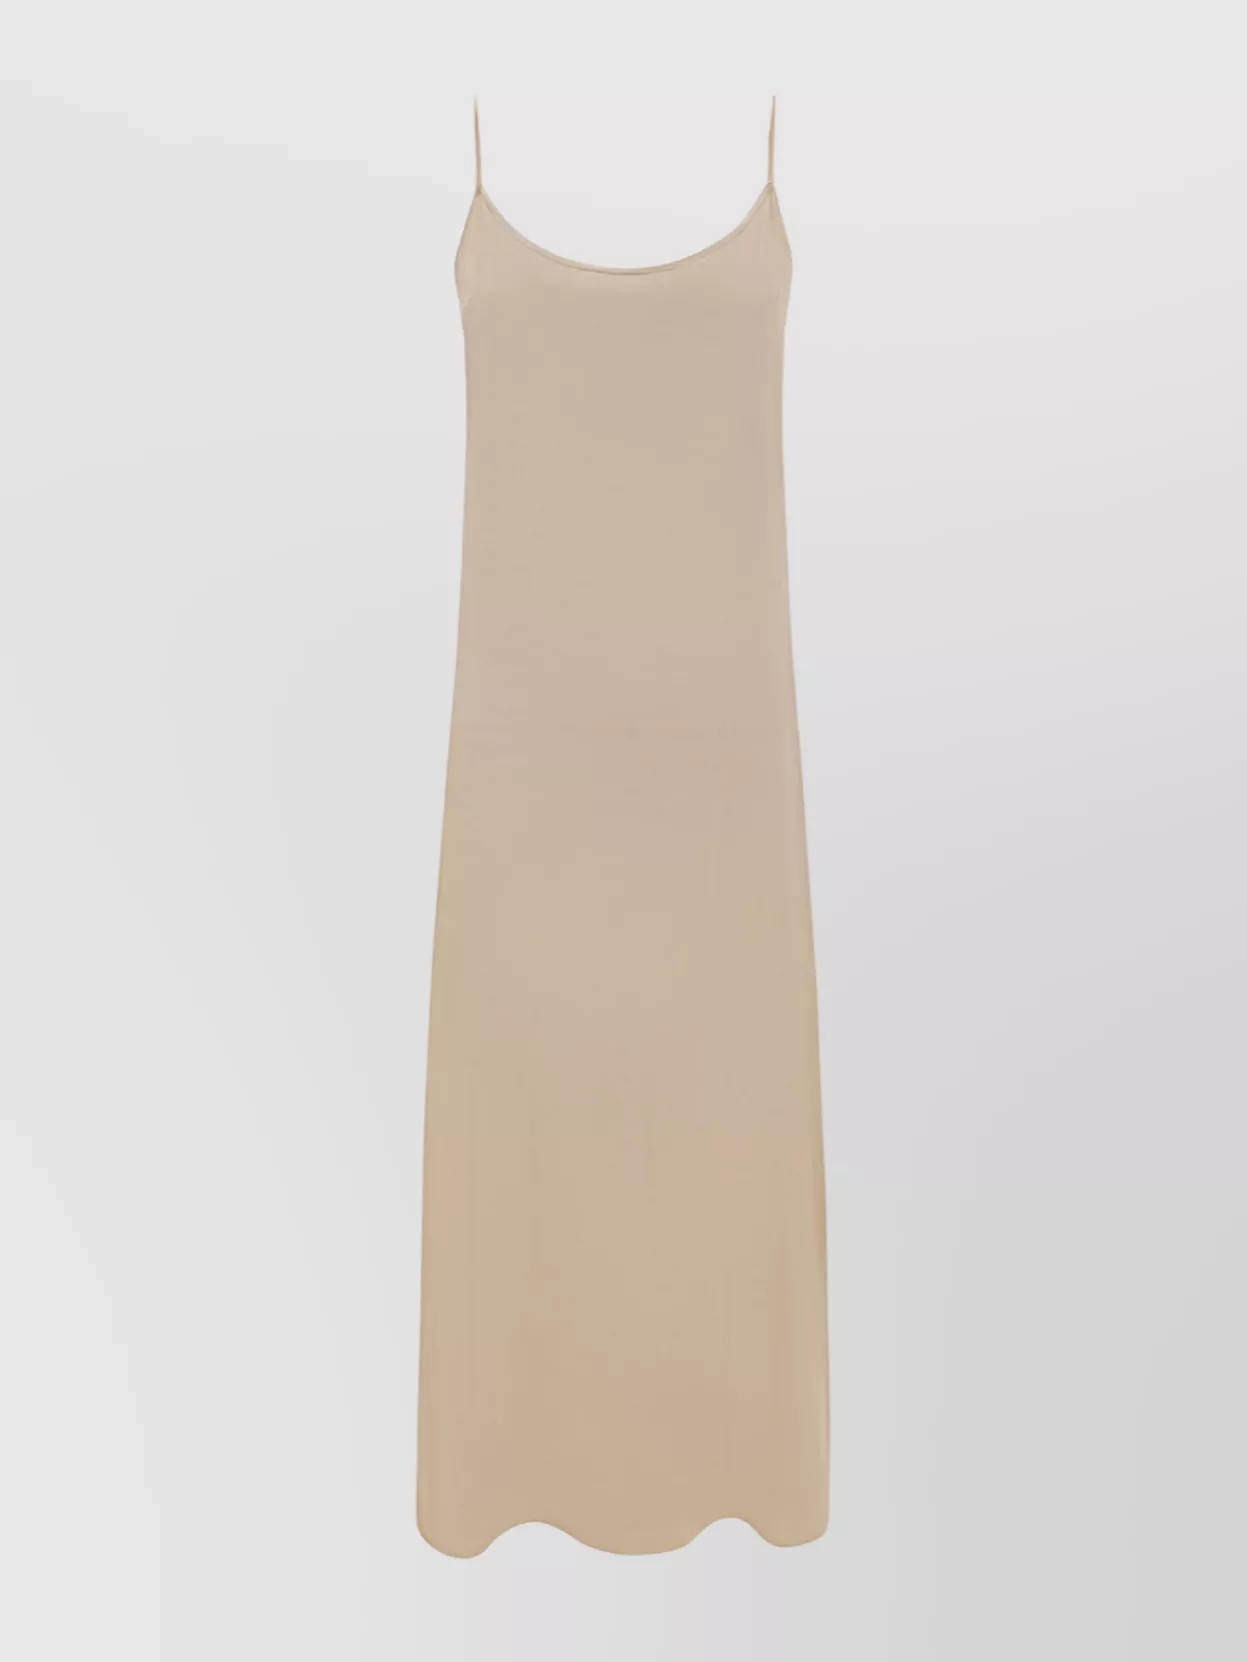 Shop Wild Cashmere Silk Dress Adjustable Straps V-neckline